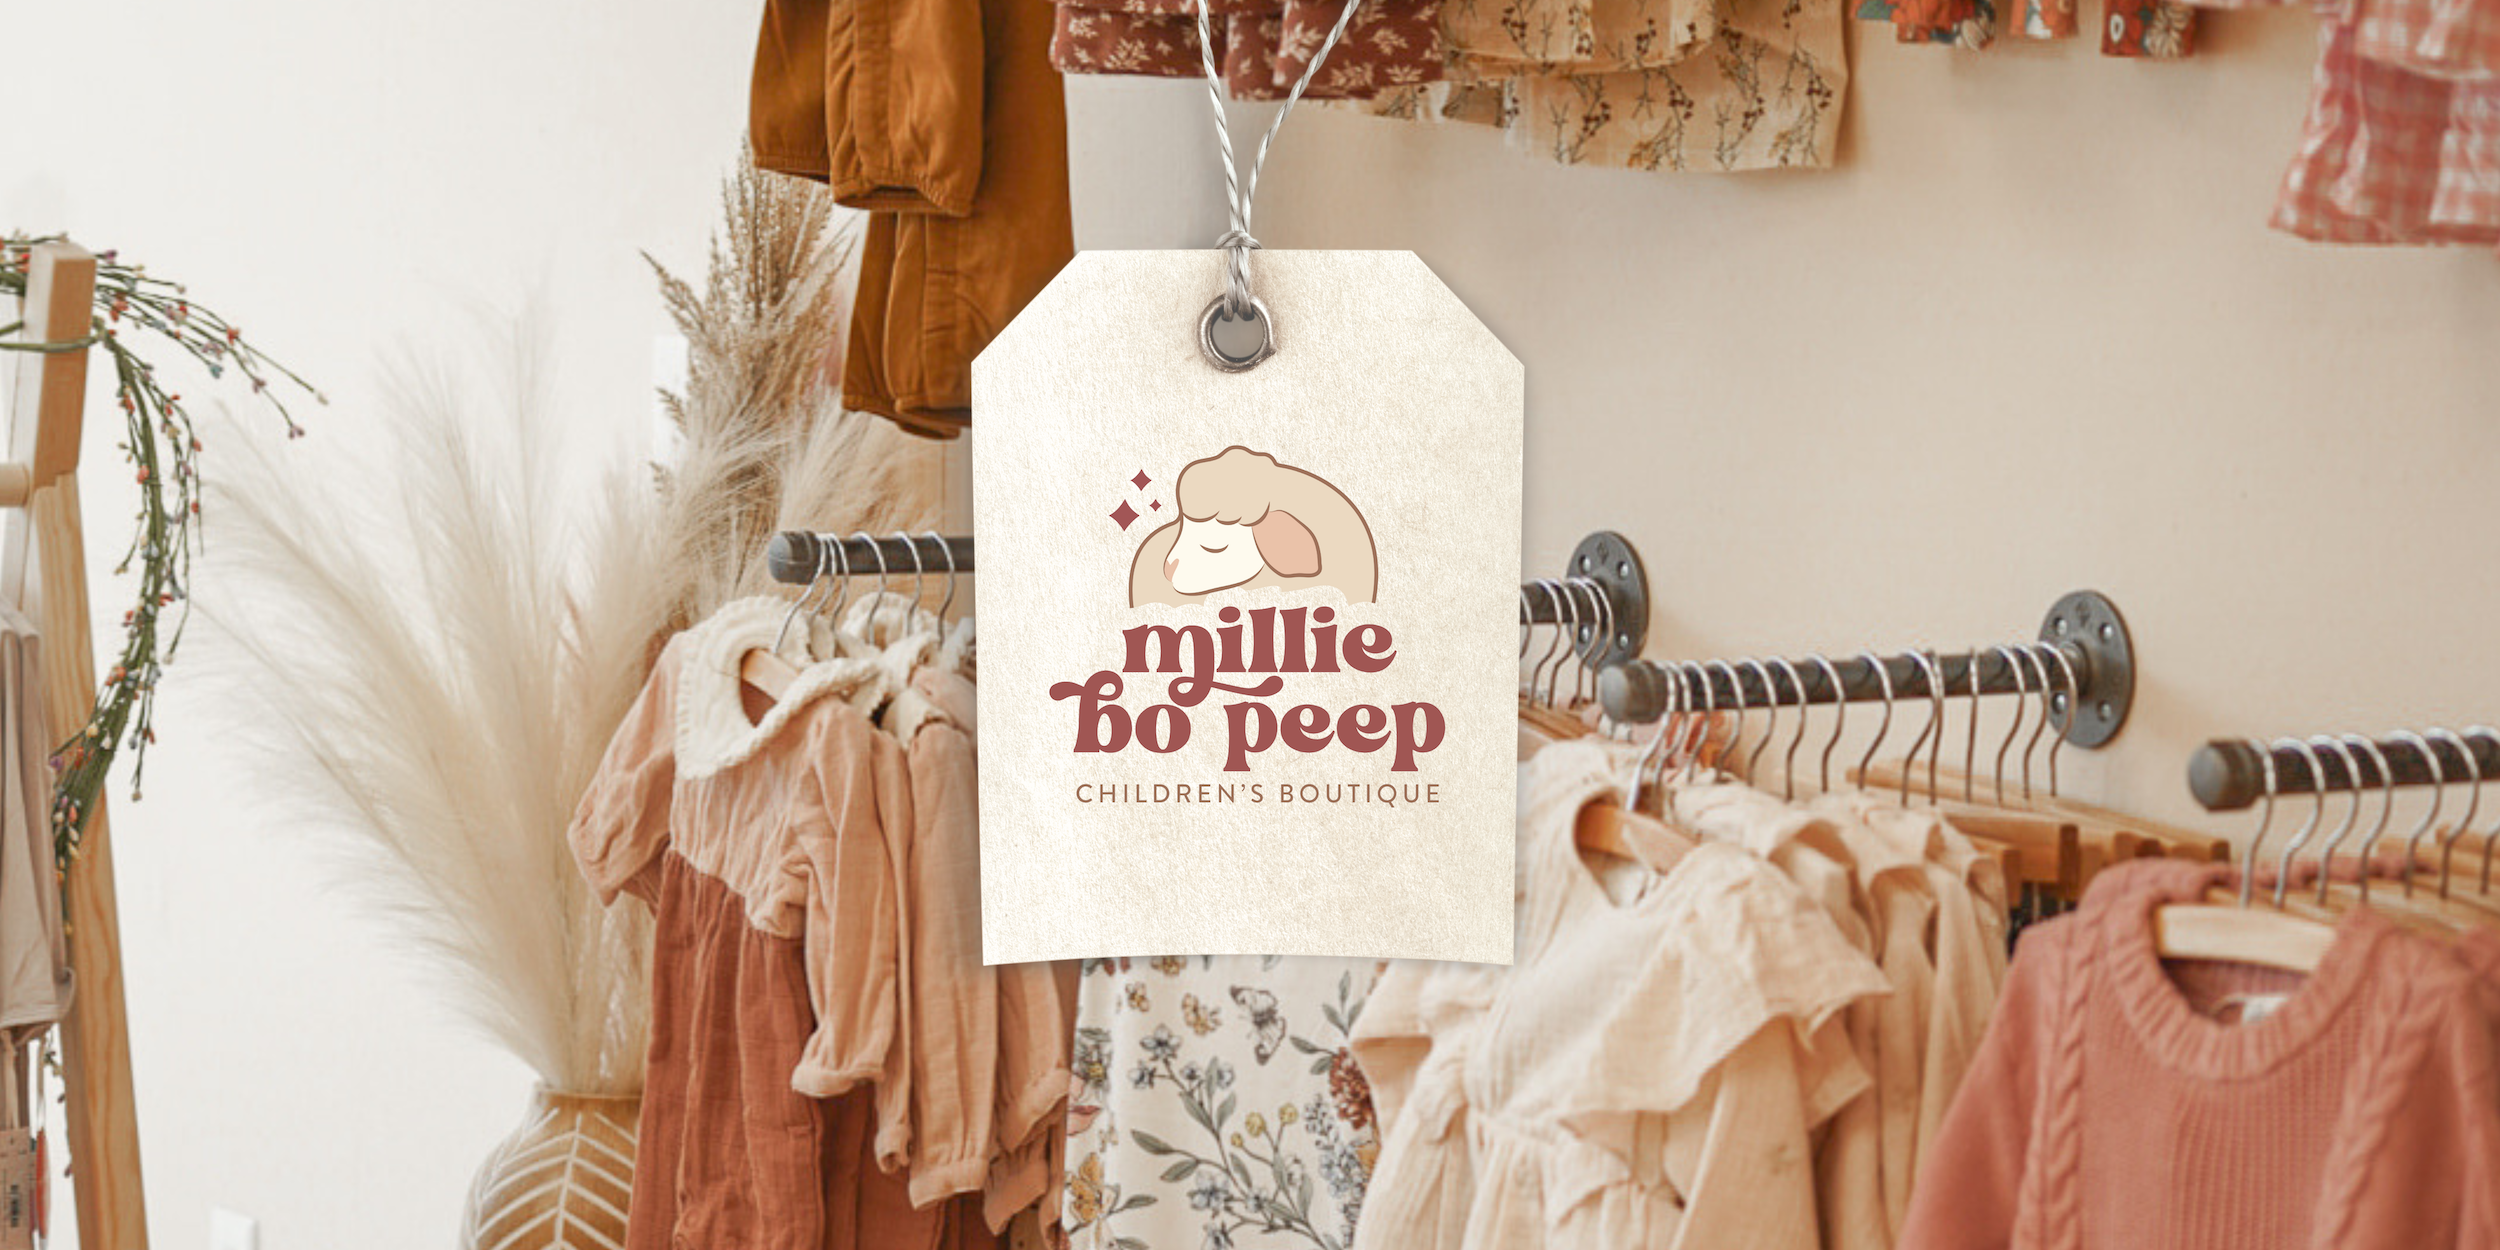 Clothing racks with a Millie Bo Peep tag 